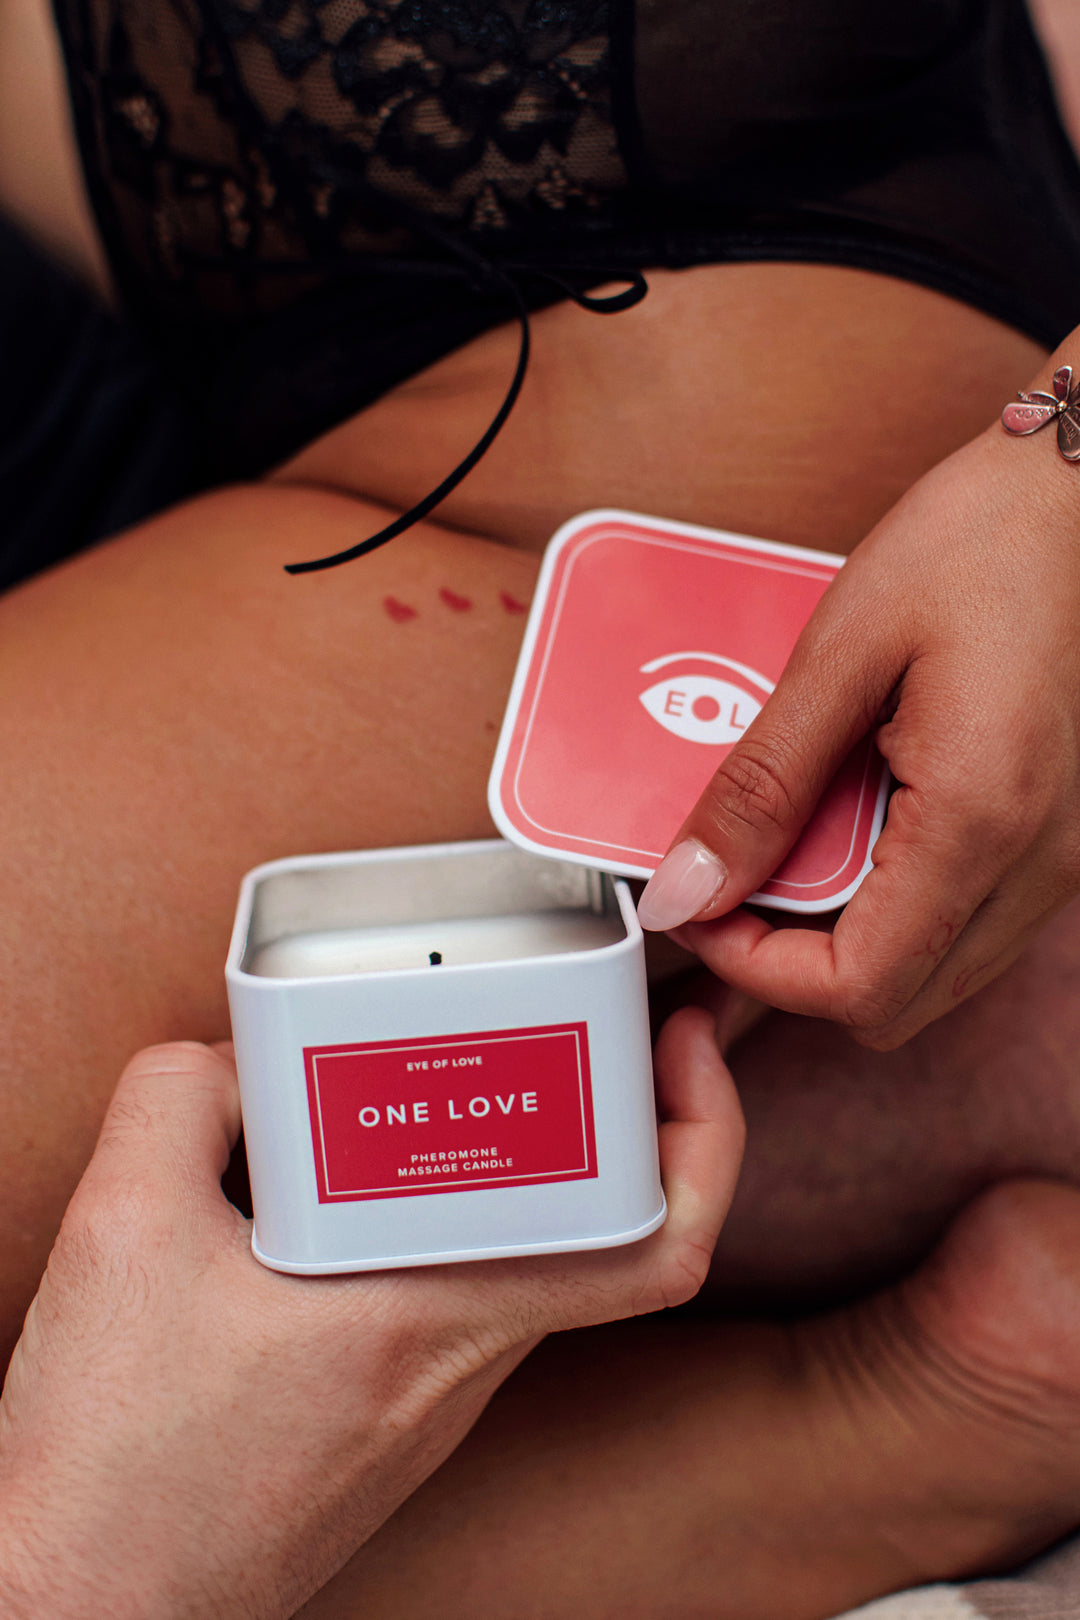 One Love Massage Candle + Free Pheromone Parfum Sample